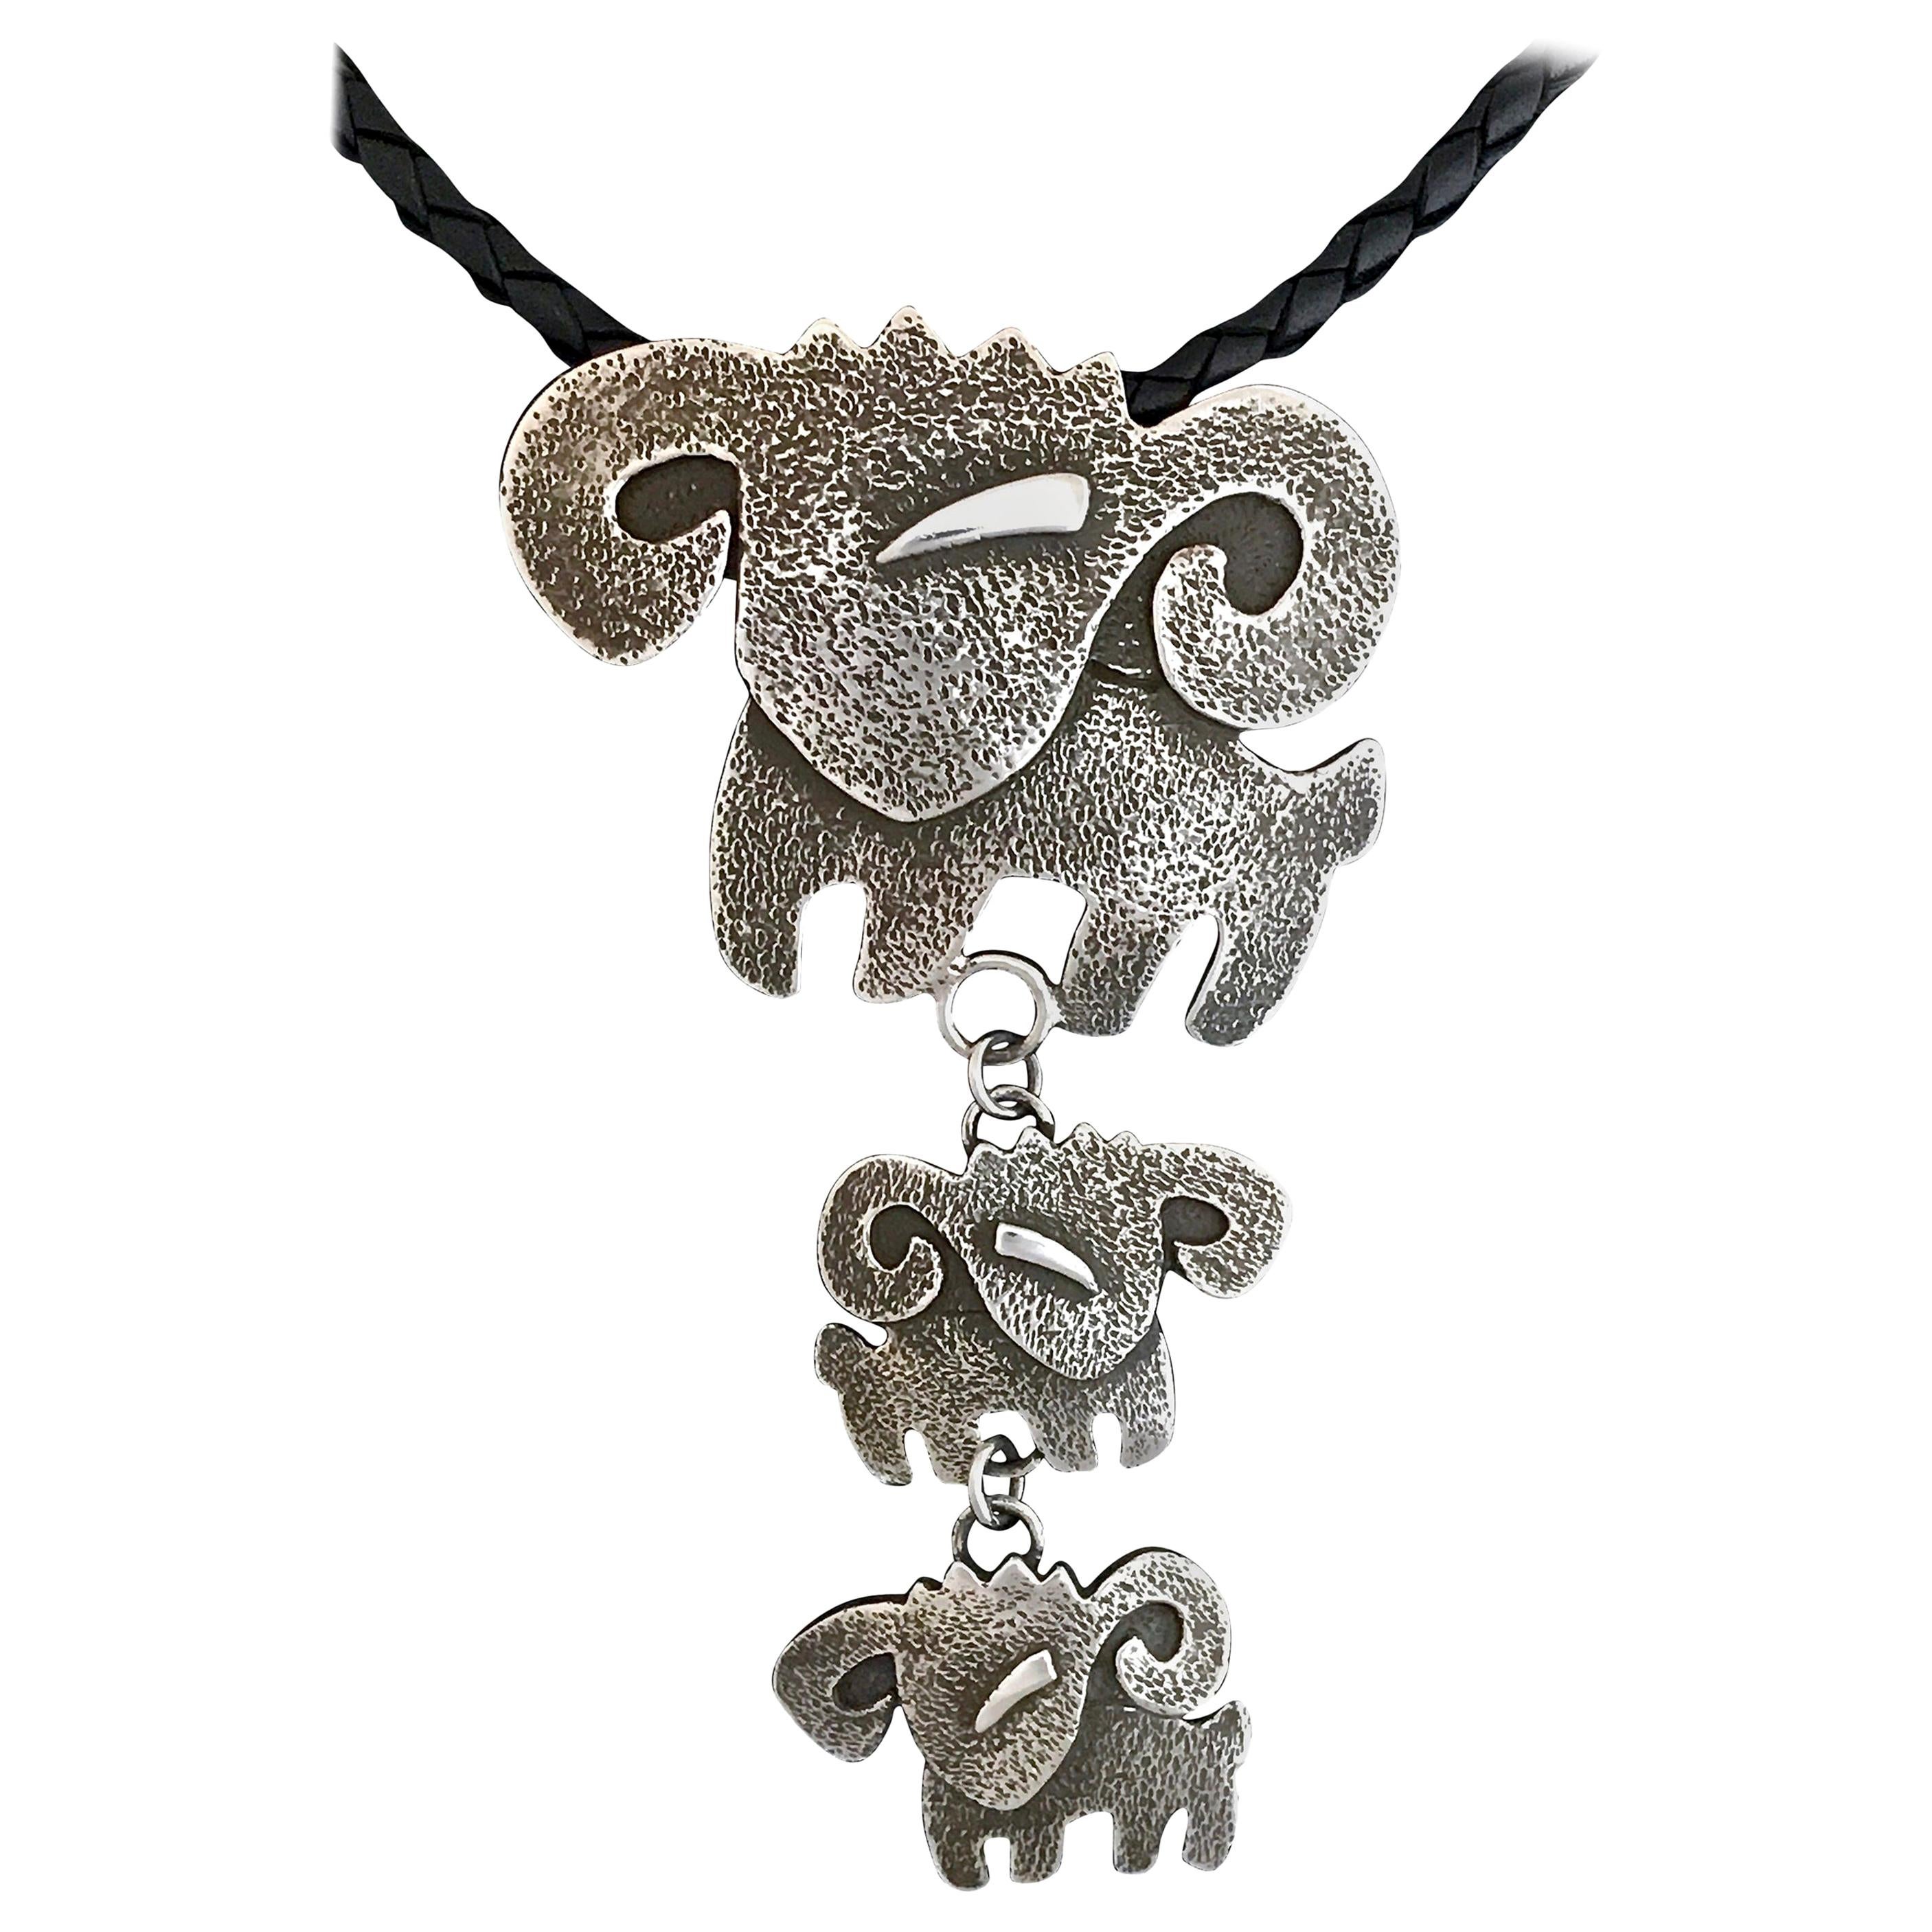 Ram drop pendant, by Melanie Yazzie, cast, sterling silver, Navajo, necklace